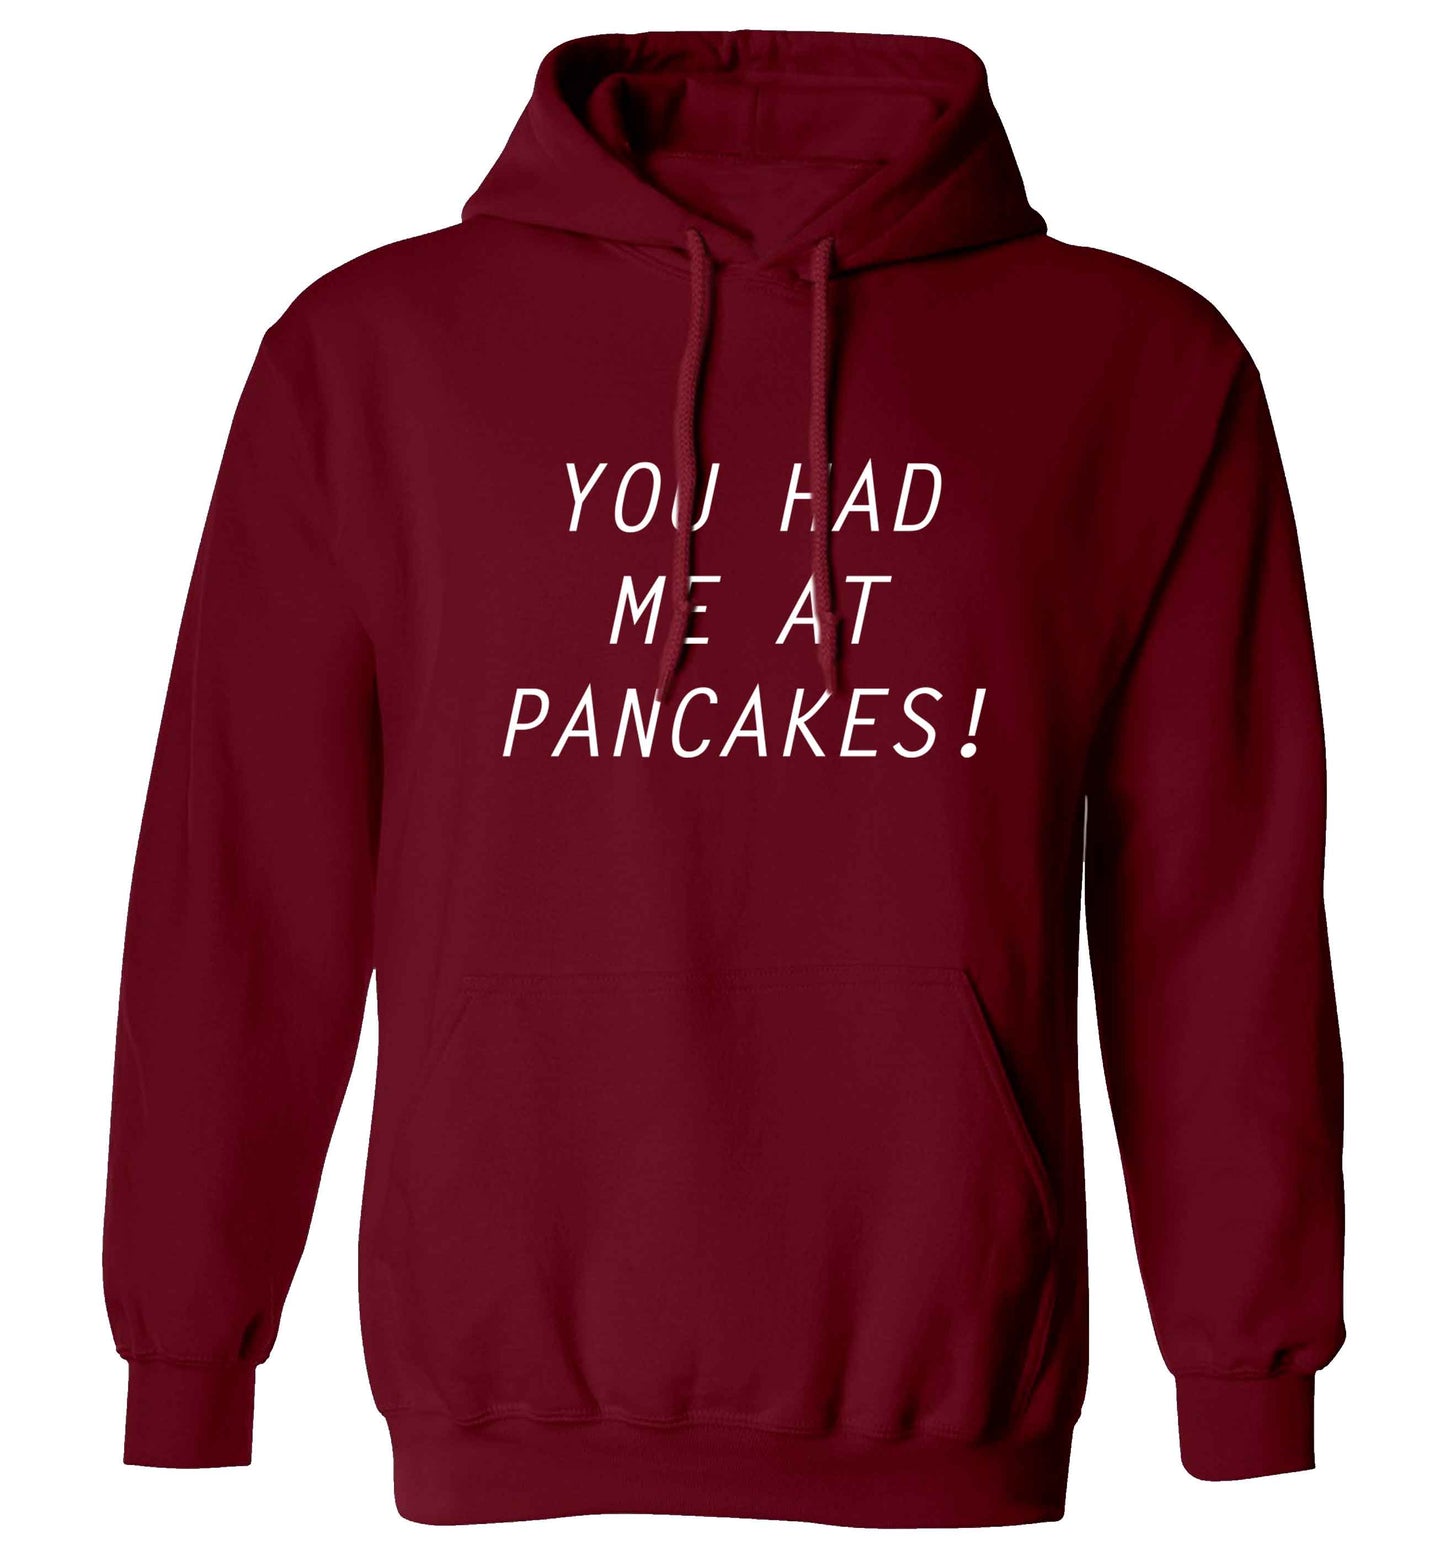 You had me at pancakes adults unisex maroon hoodie 2XL